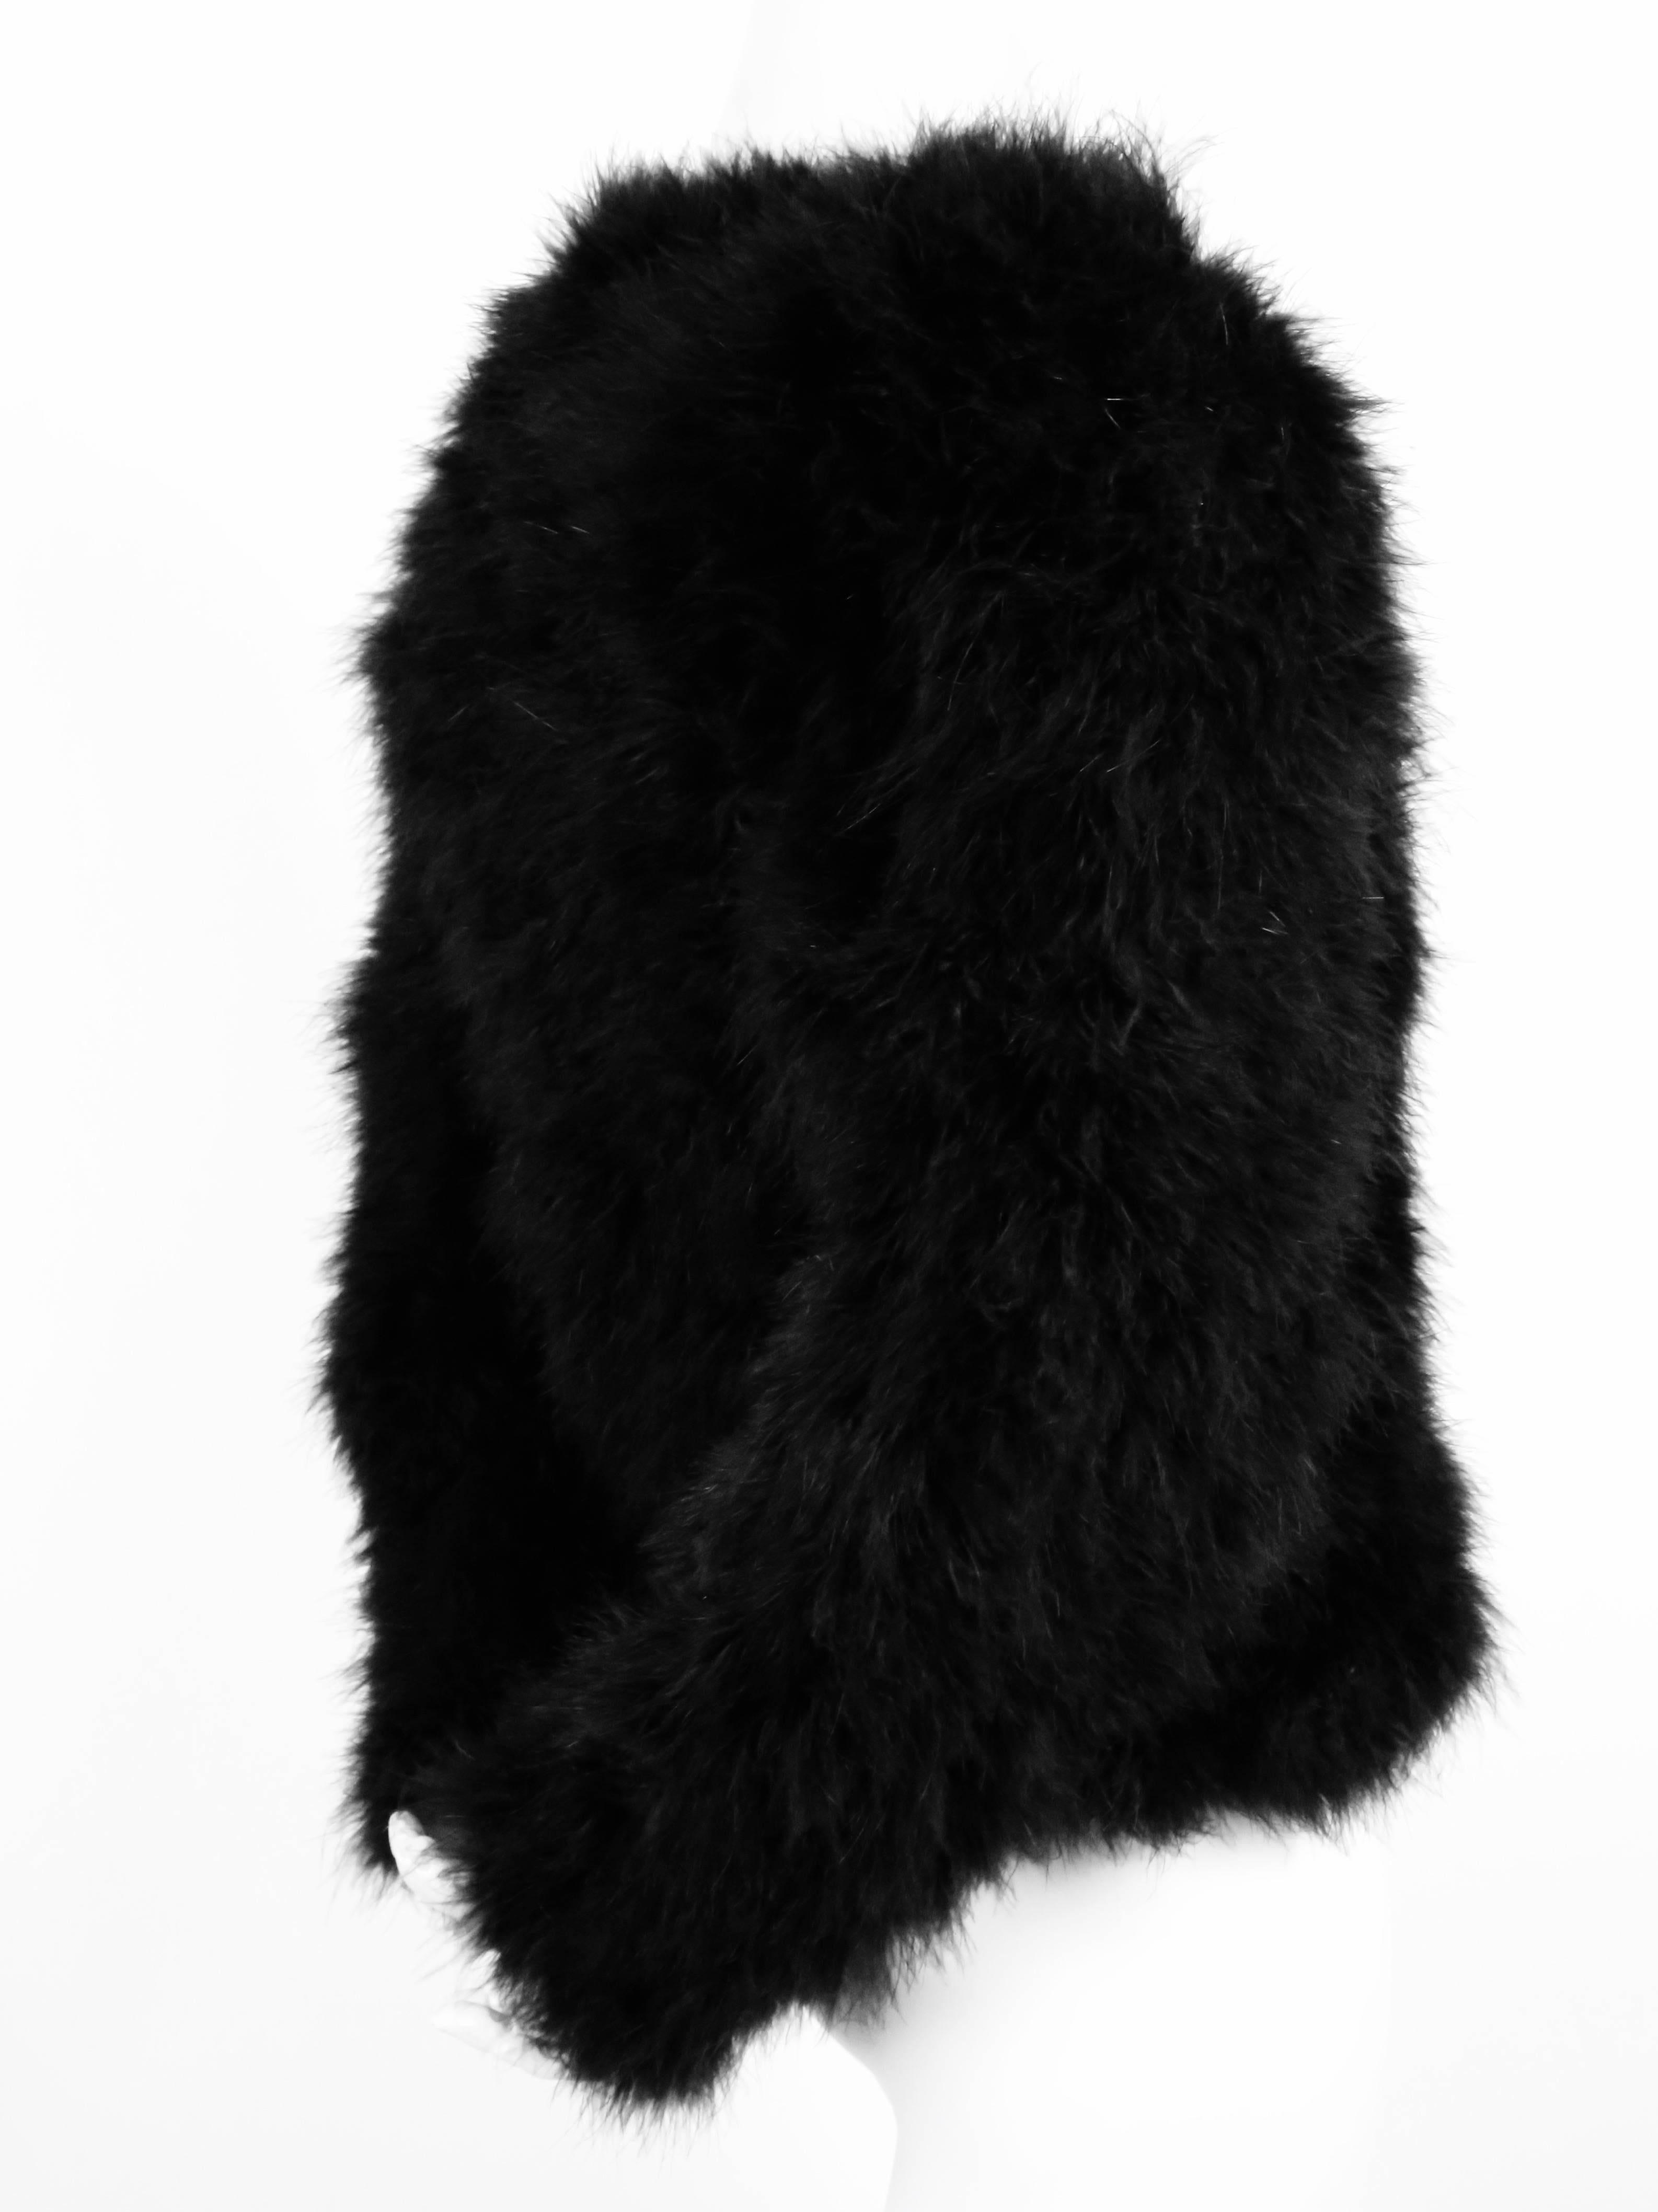 Black Sonia Rykiel black marabou feather jacket, 1970s 